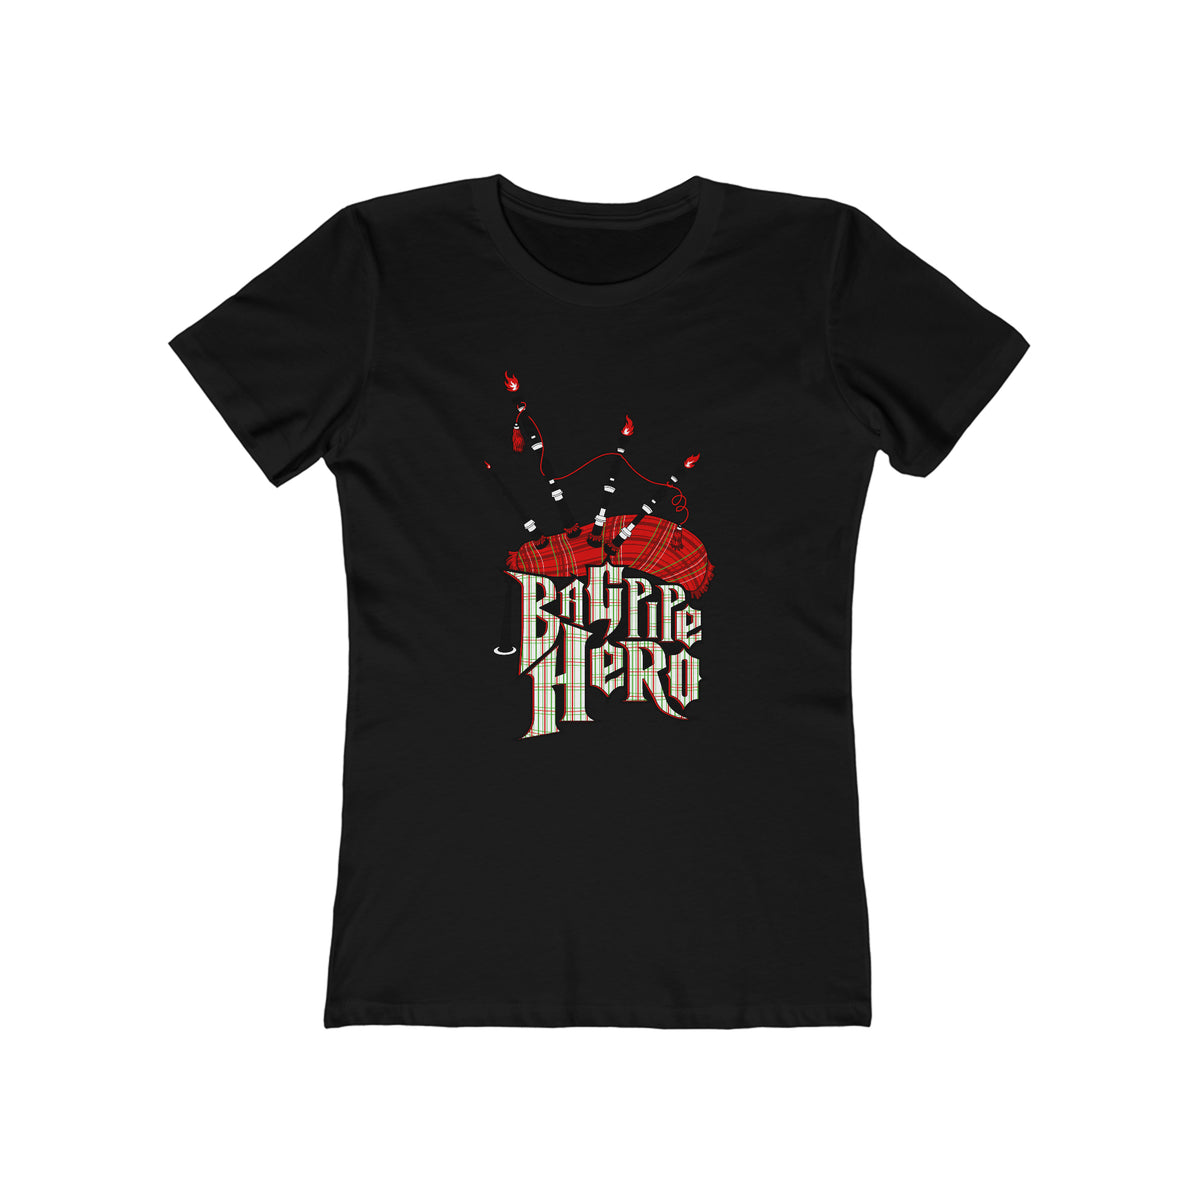 Bagpipe Hero - Women’s T-Shirt